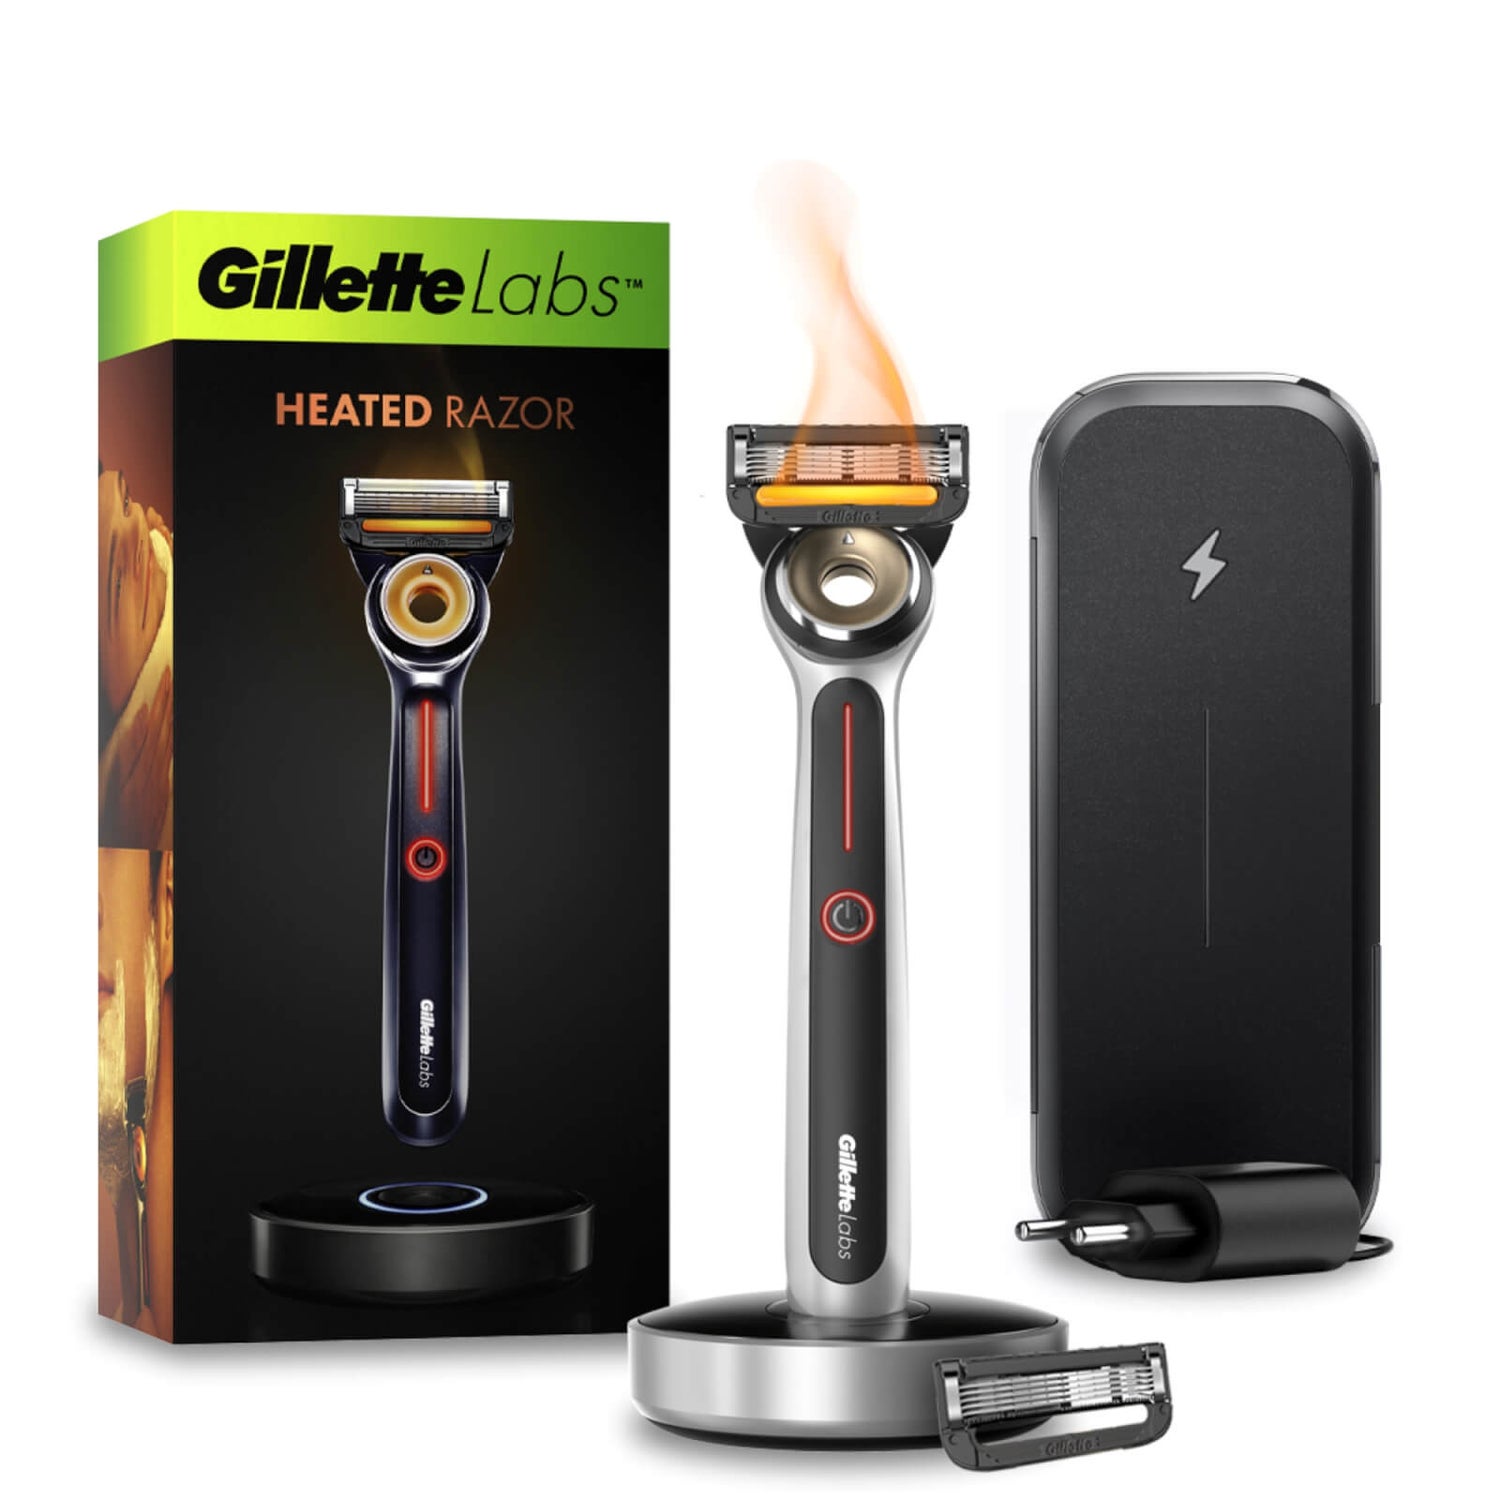 Gillette Labs Heated Razor Travel Kit